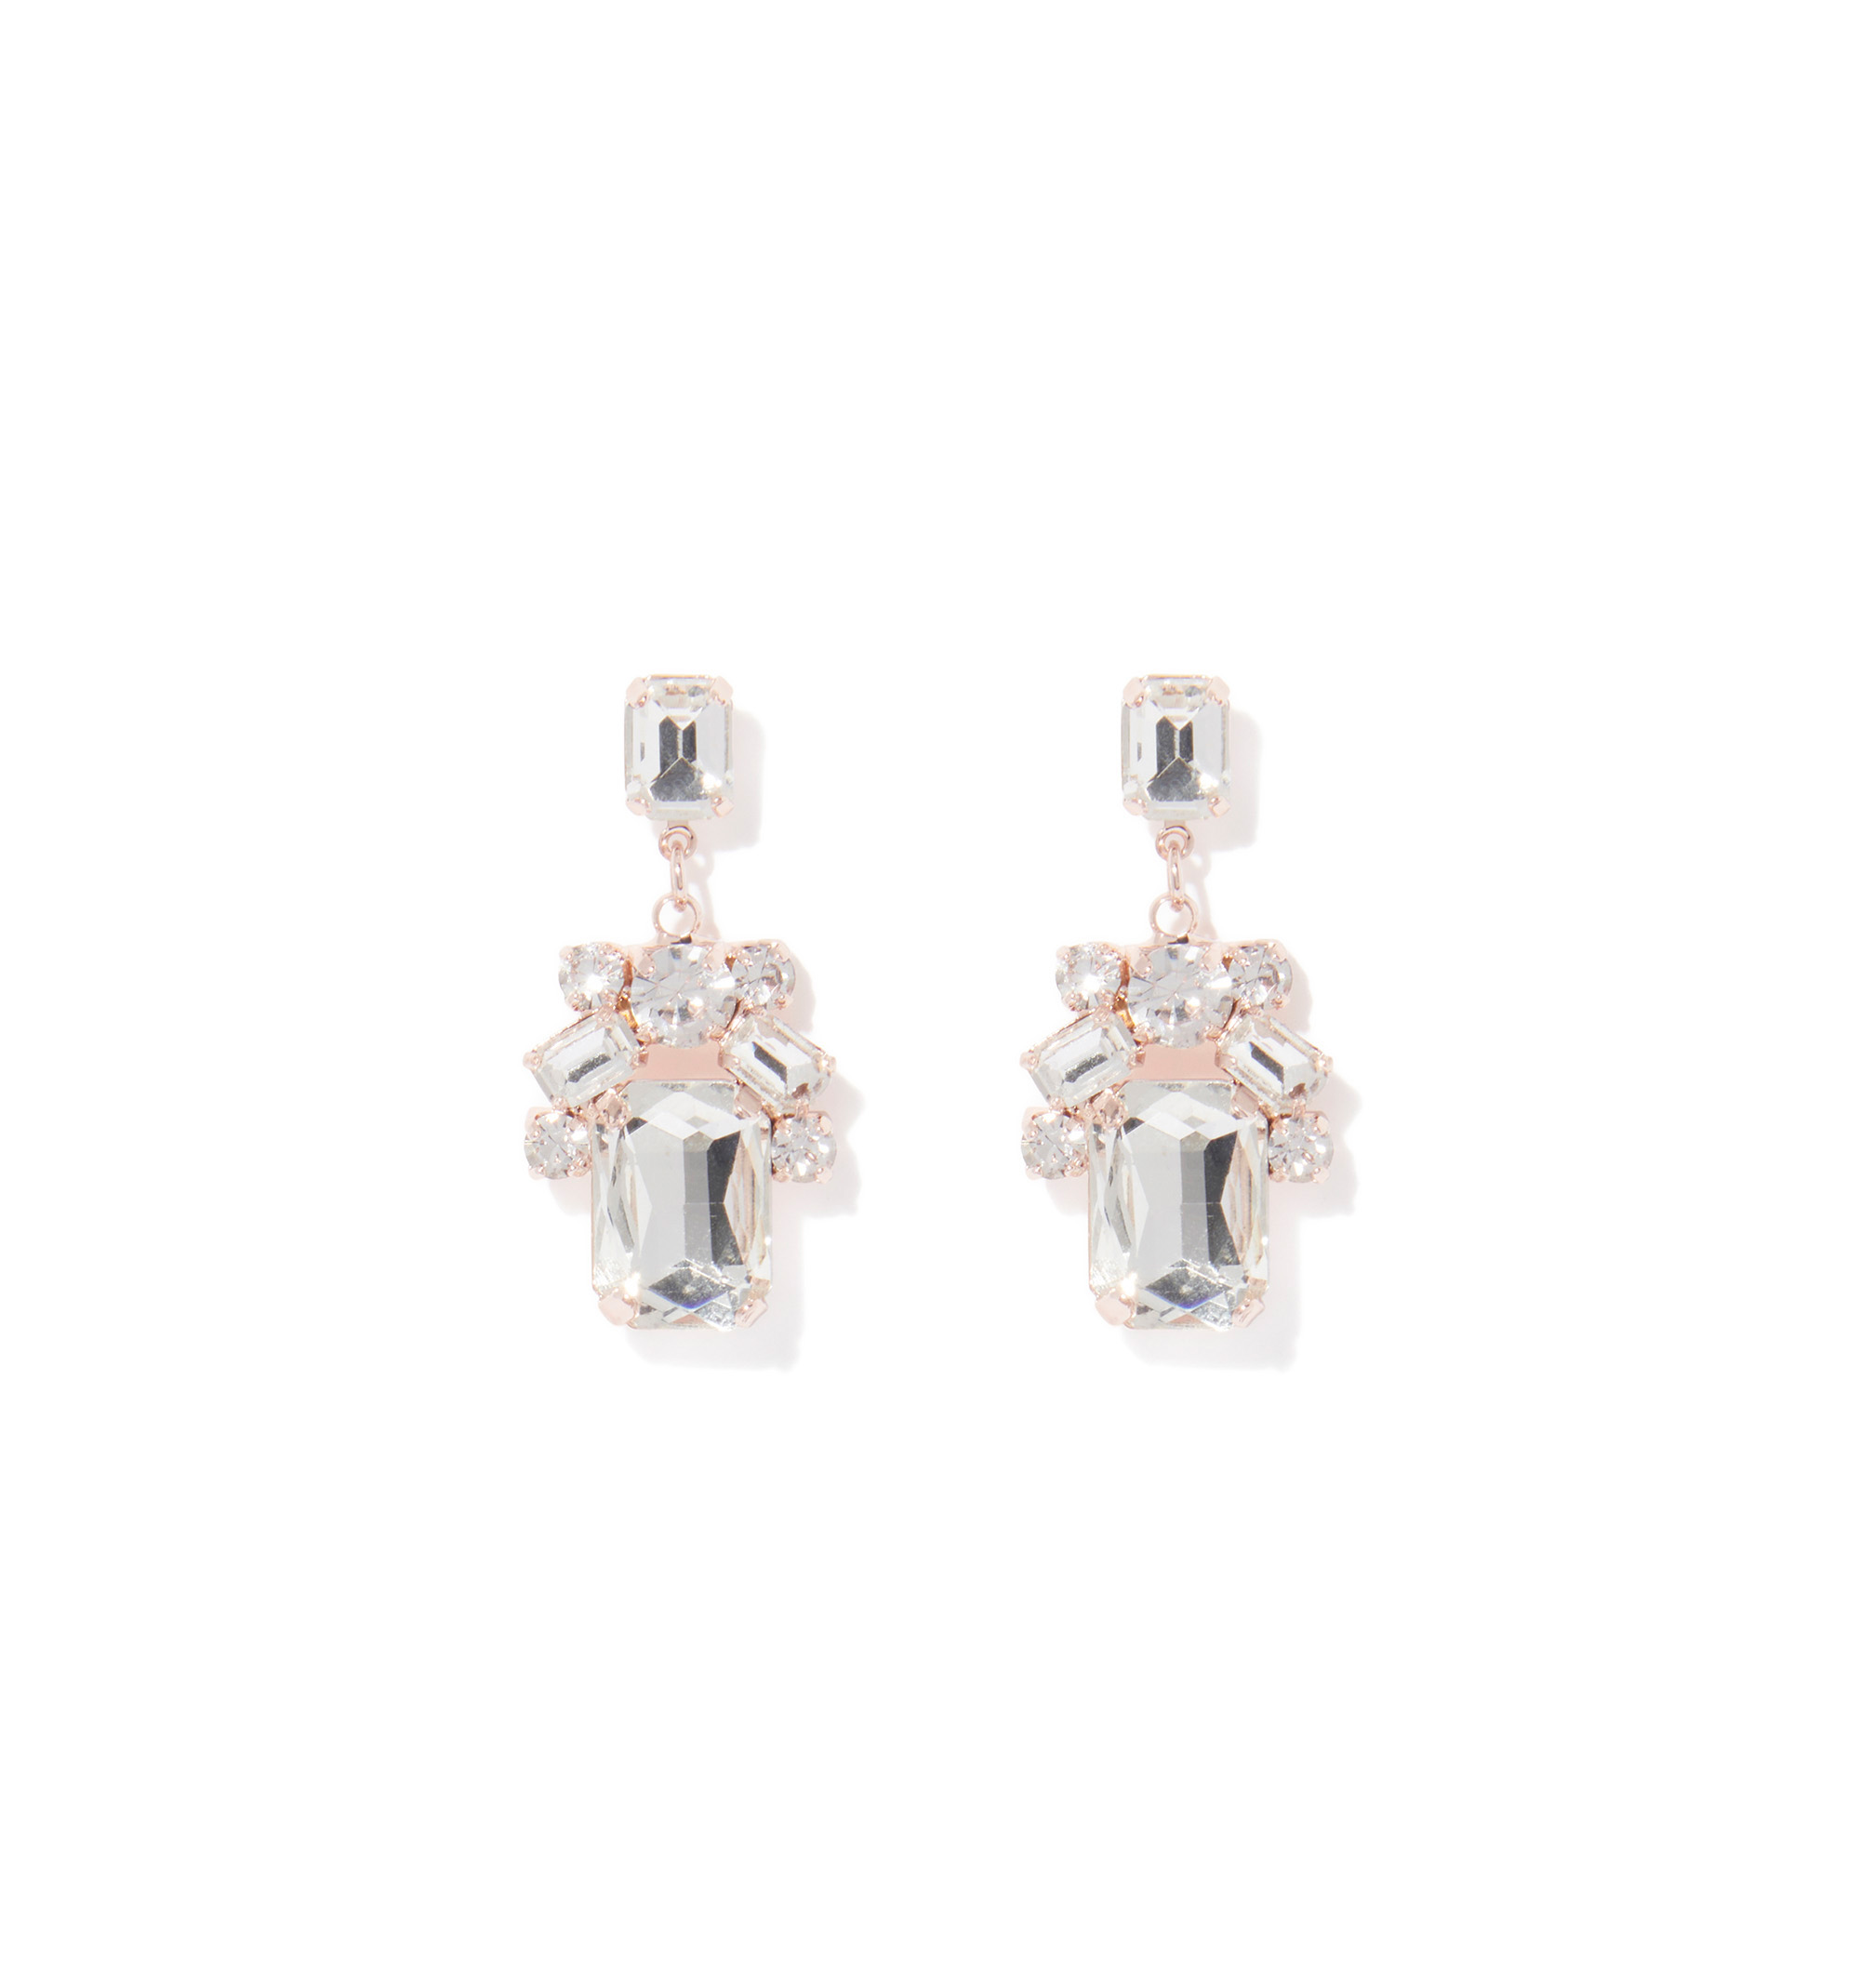 Share 116+ crystal stone earrings latest